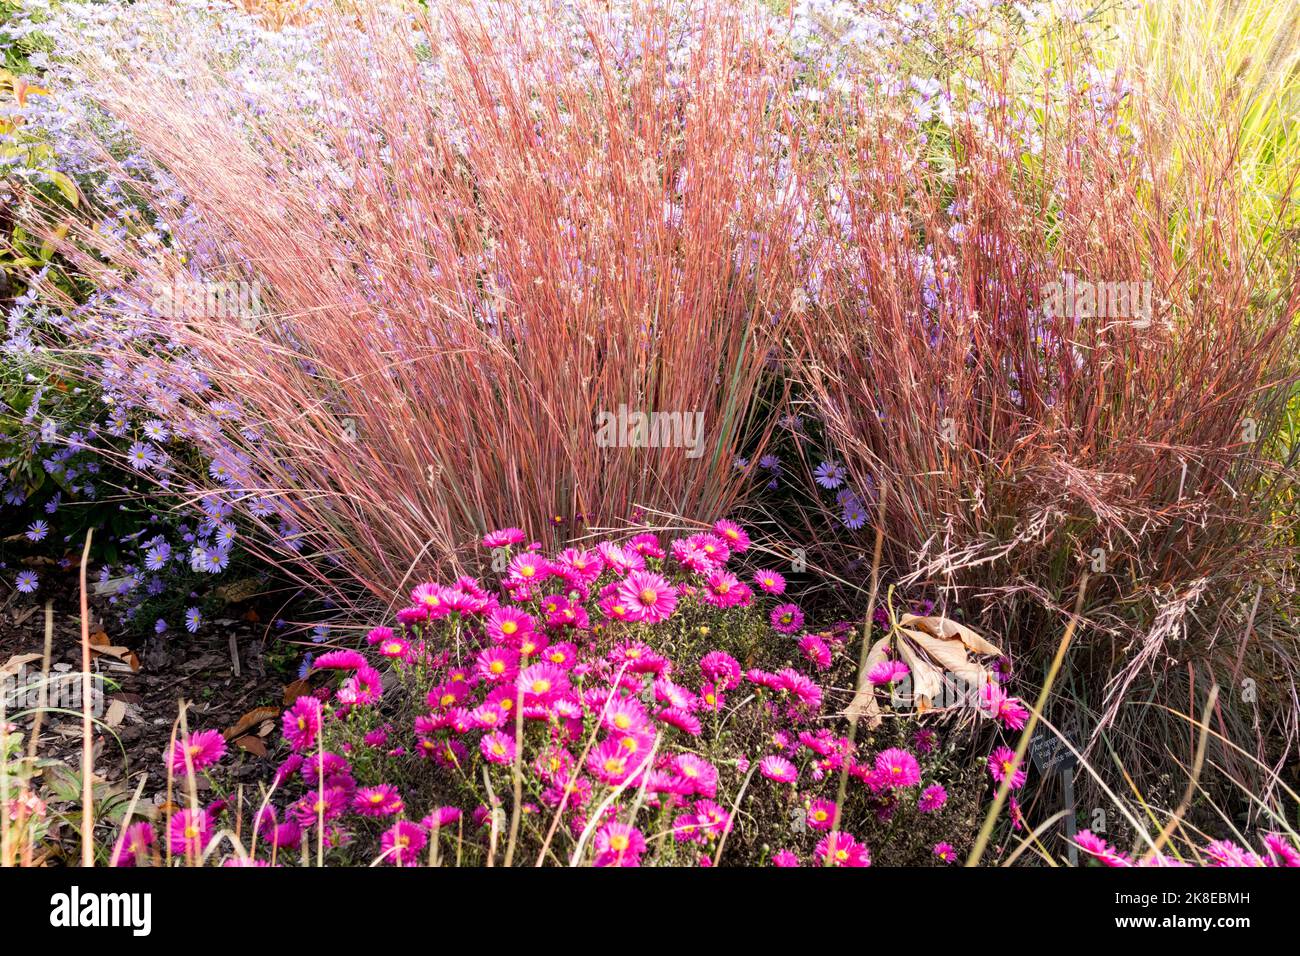 Garden, Autumn, Grass, Schizachyrium scoparium, Tuft of grass, Ornamental, Plants, Clumps of Grasses, Mums Stock Photo